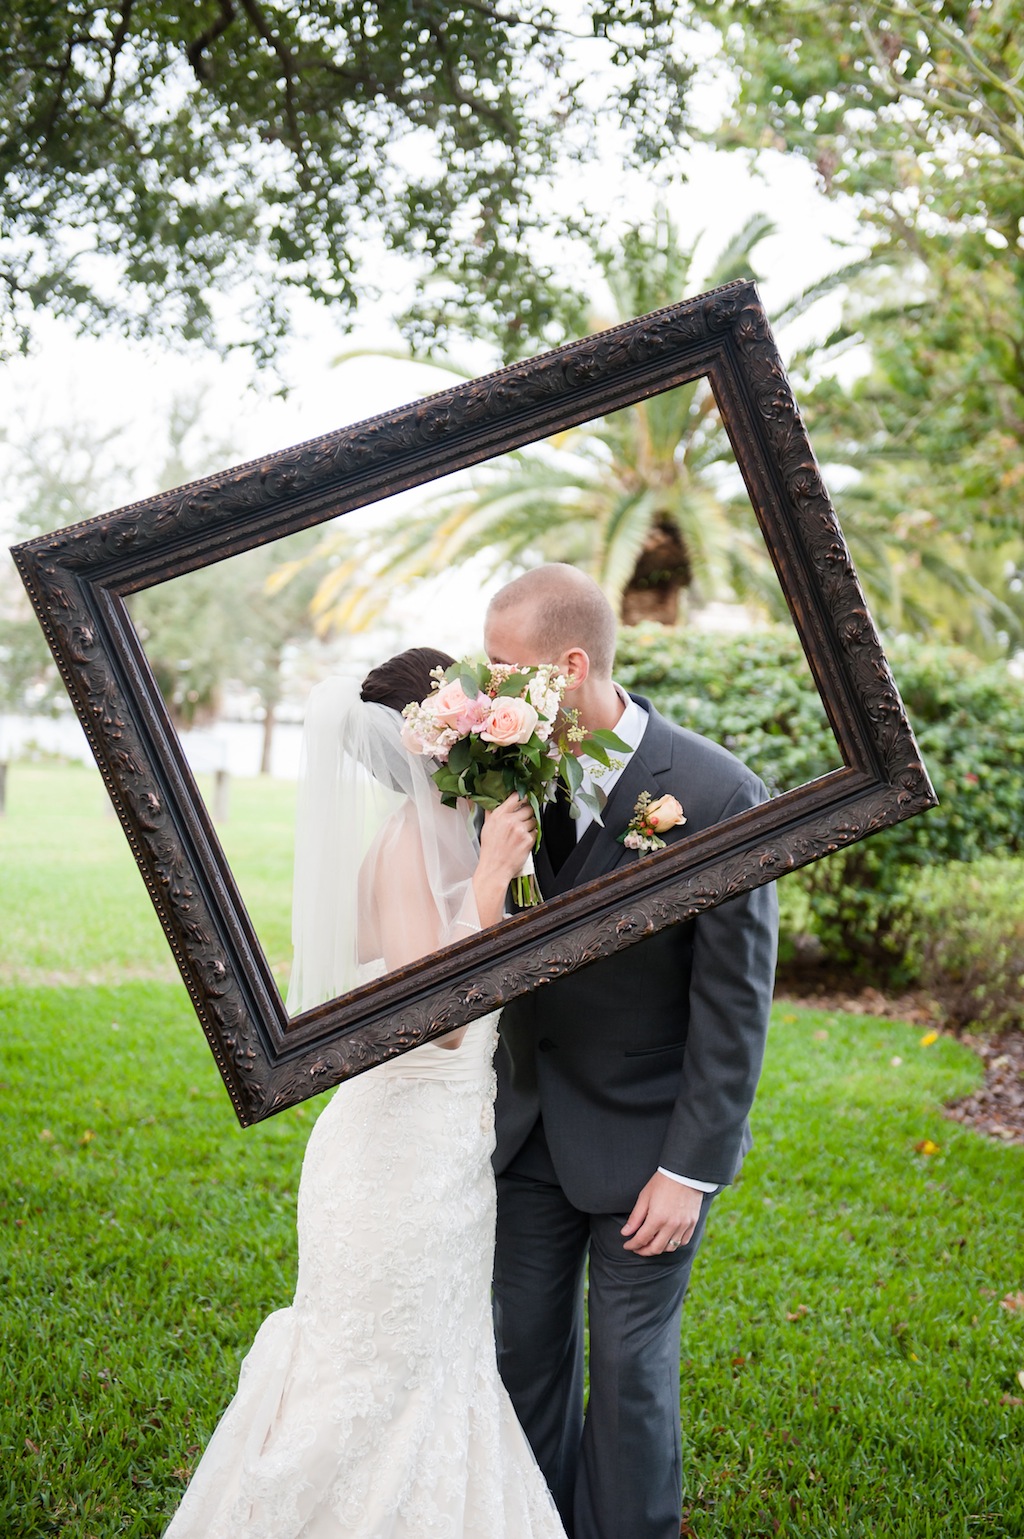 Davis Island Garden Club Wedding - Coral and Mint Green Natural Wedding - Tampa Wedding Photographer Sarah & Ben (29)